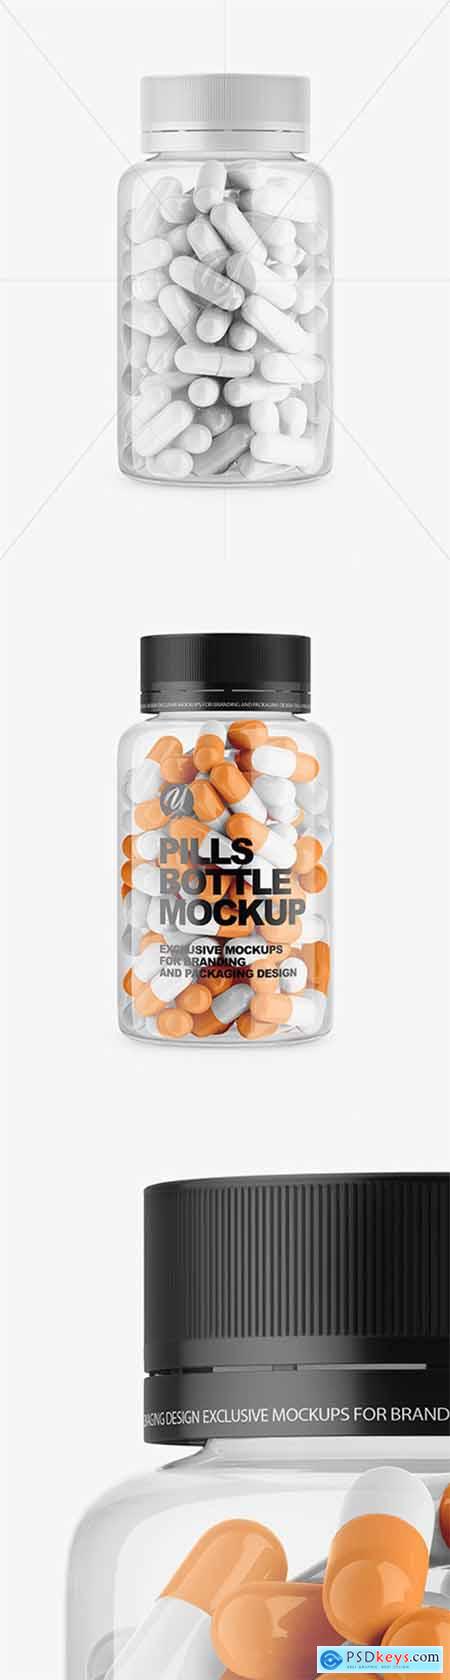 Clear Plasti Bottle With Pills Mockup 60105